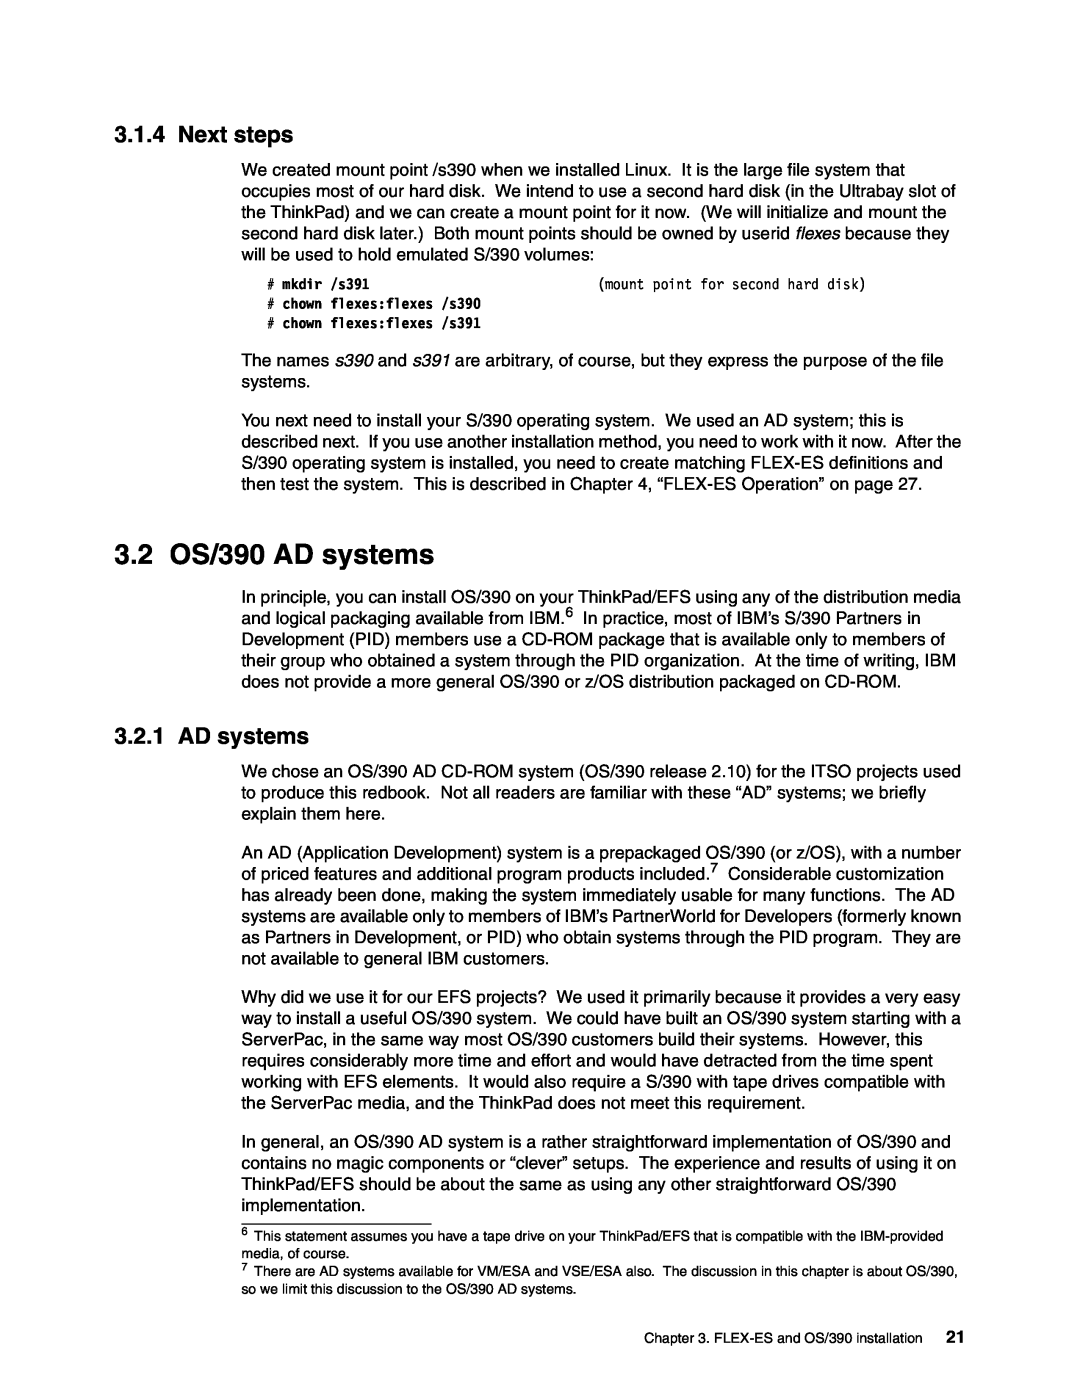 IBM s/390 manual 3.2 OS/390 AD systems, Next steps 